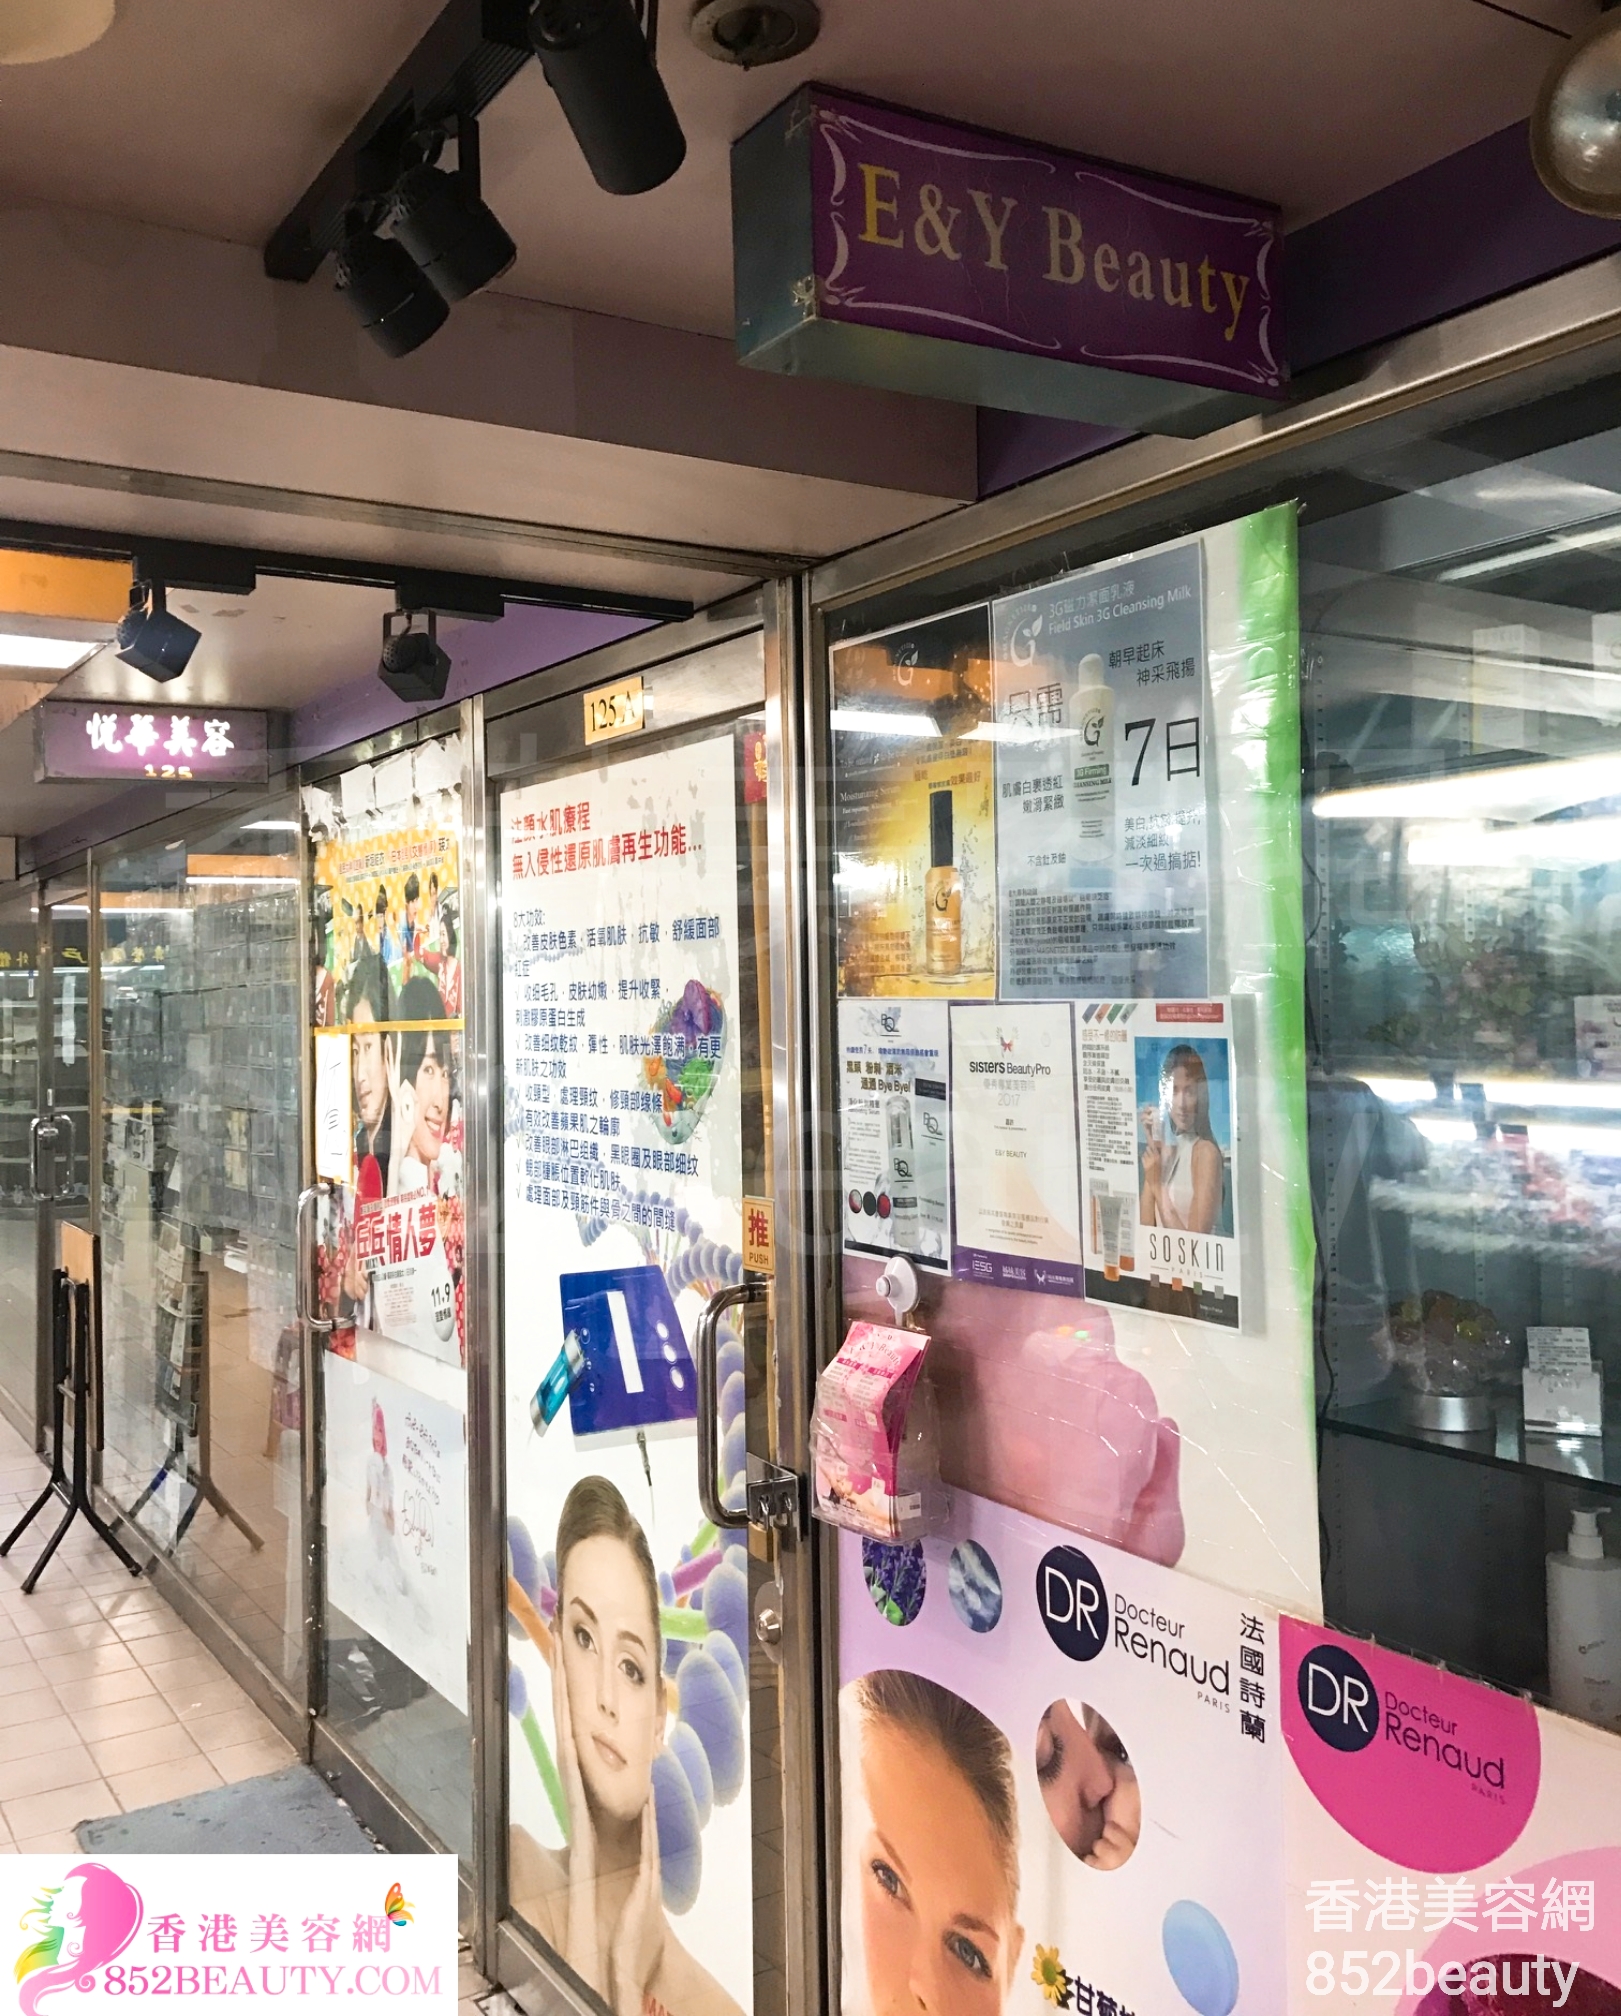 香港美容網 Hong Kong Beauty Salon 美容院 / 美容師: E&Y Beauty 悅華美容